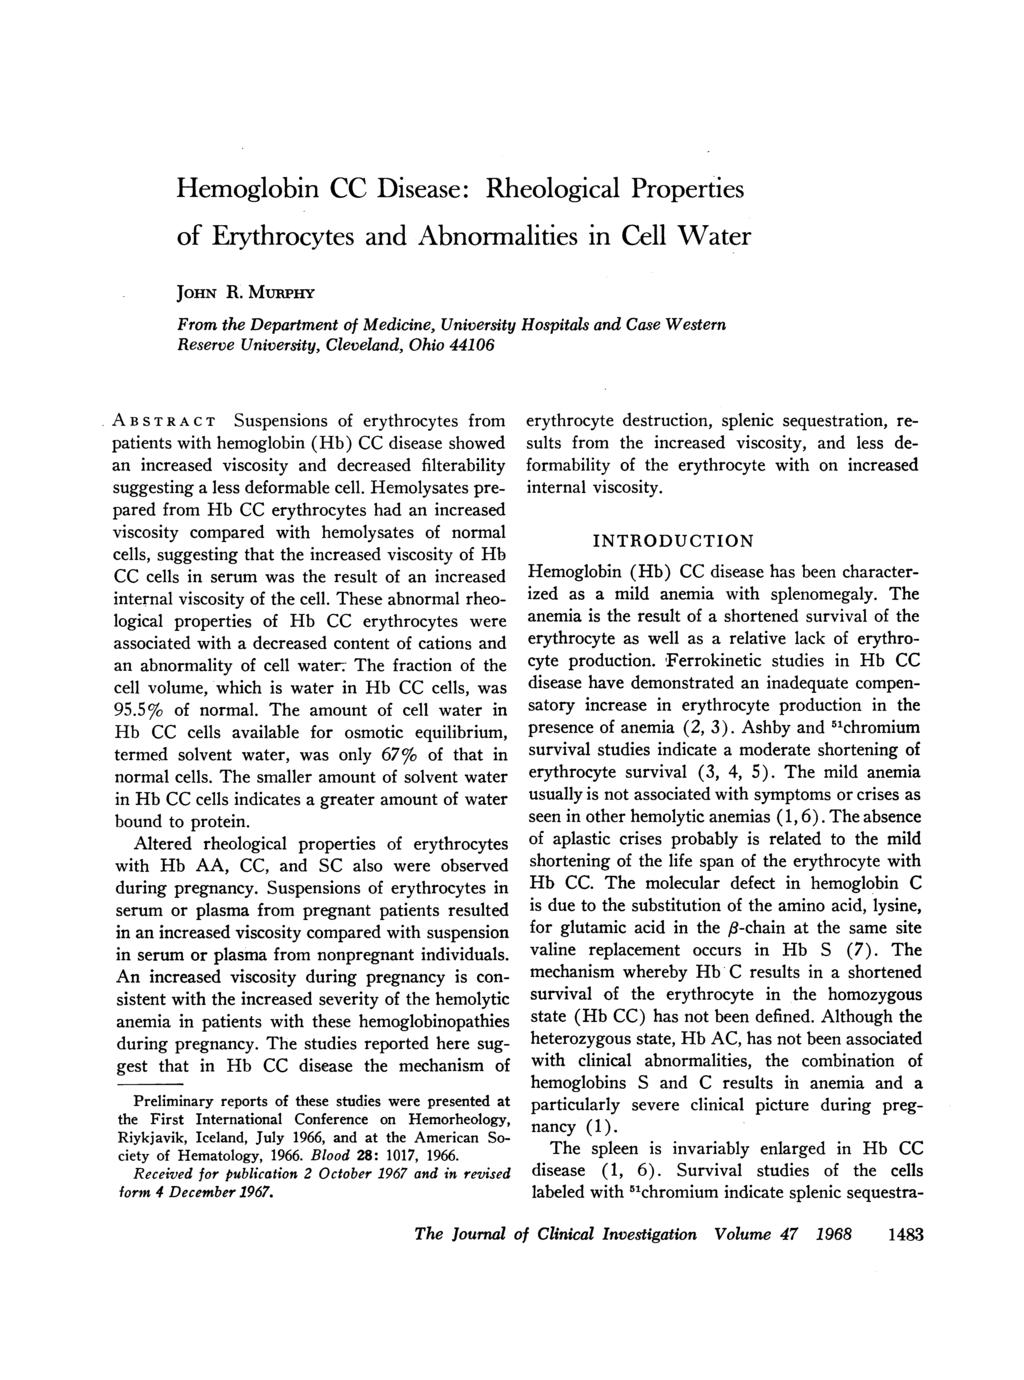 Hemoglobin CC Disease: Rheological Properties of Erythrocytes and Abnormalities in Cell Water JOHN R.